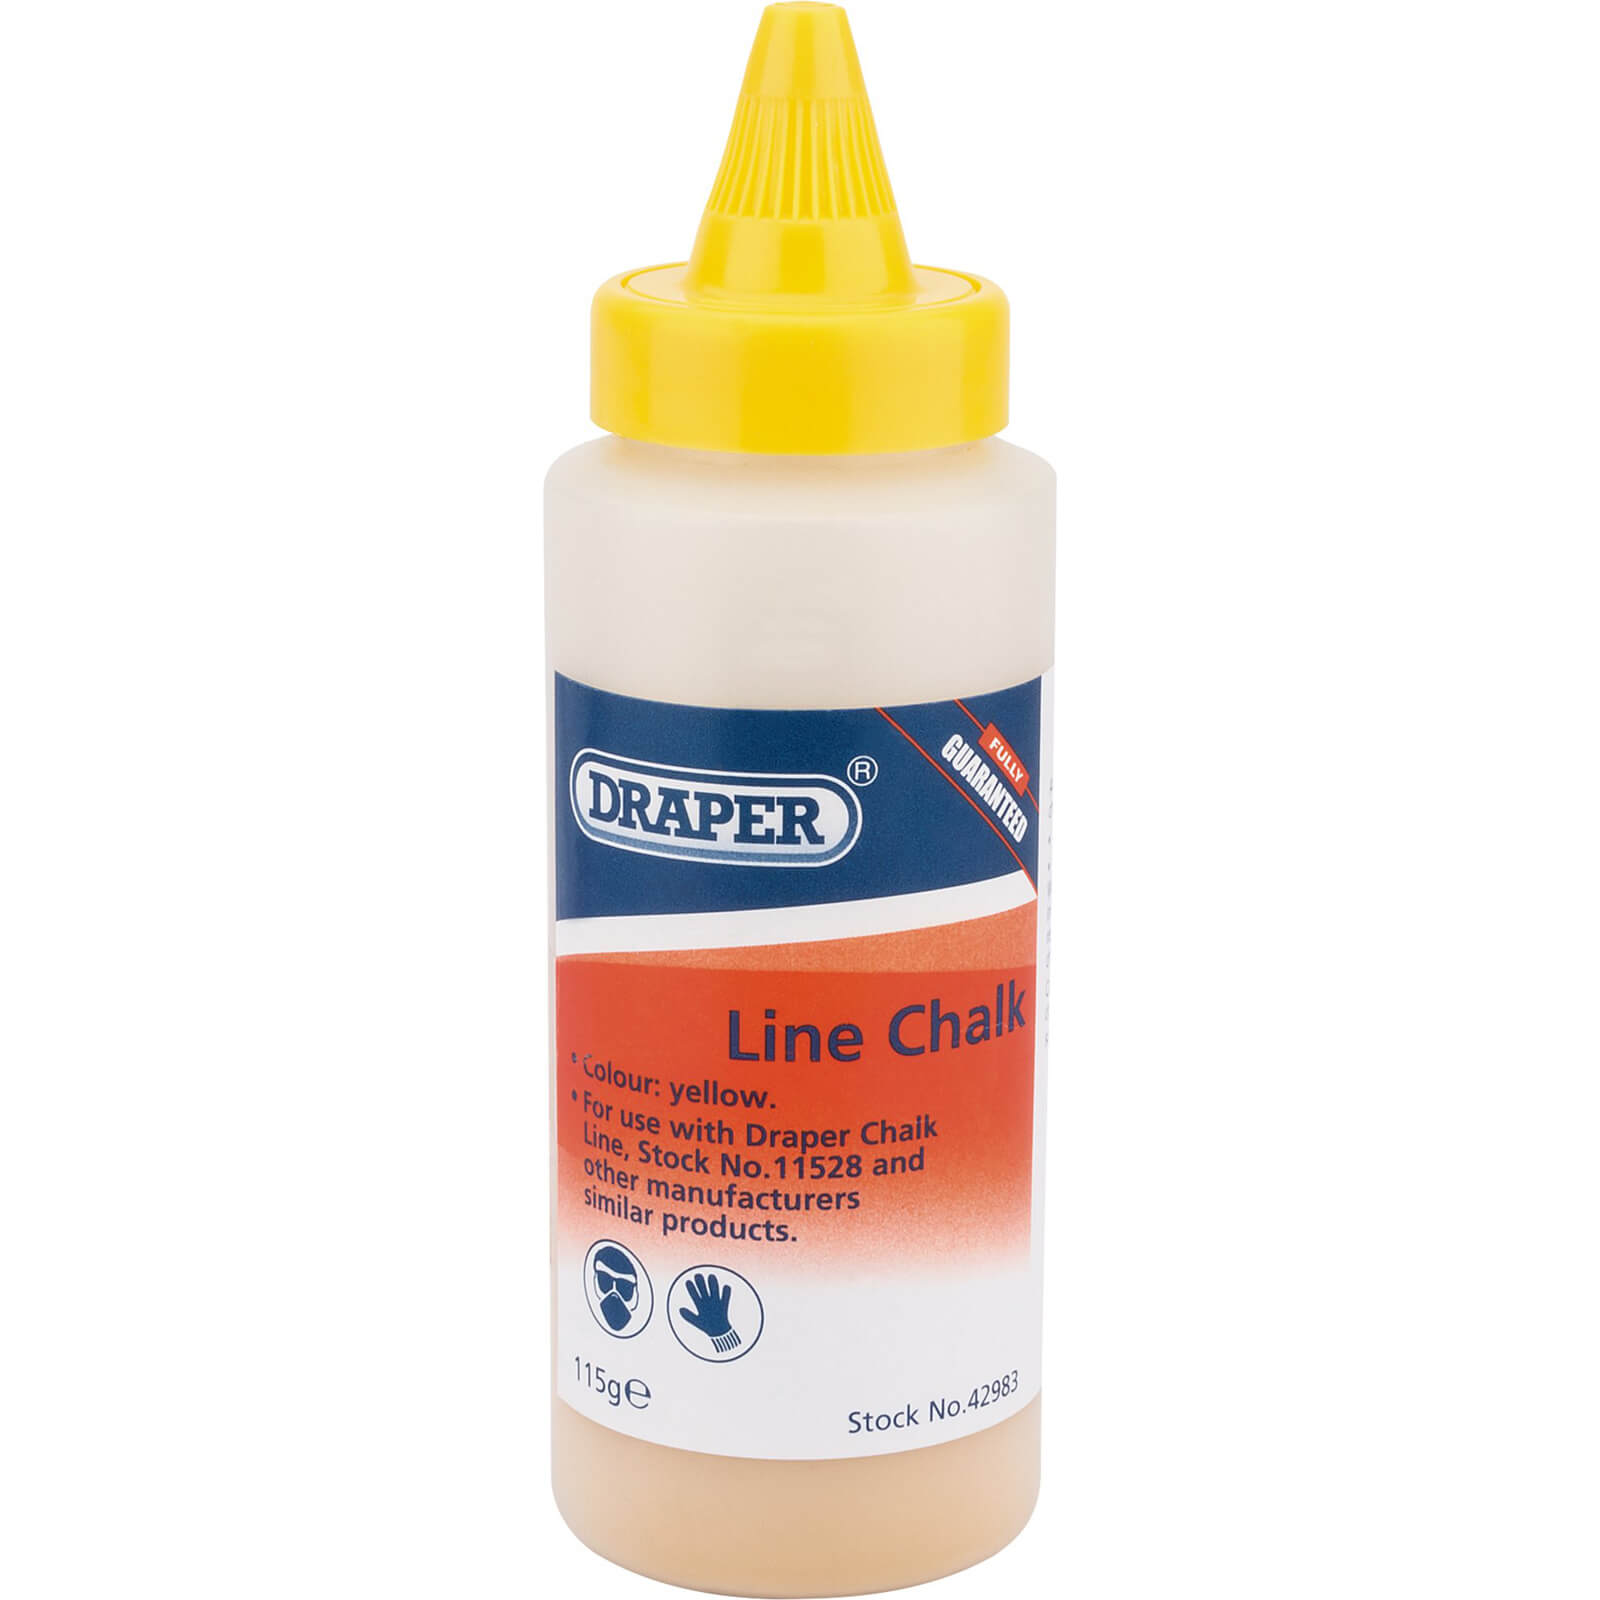 Photo of Draper Chalk Line Refill Bottle Yellow